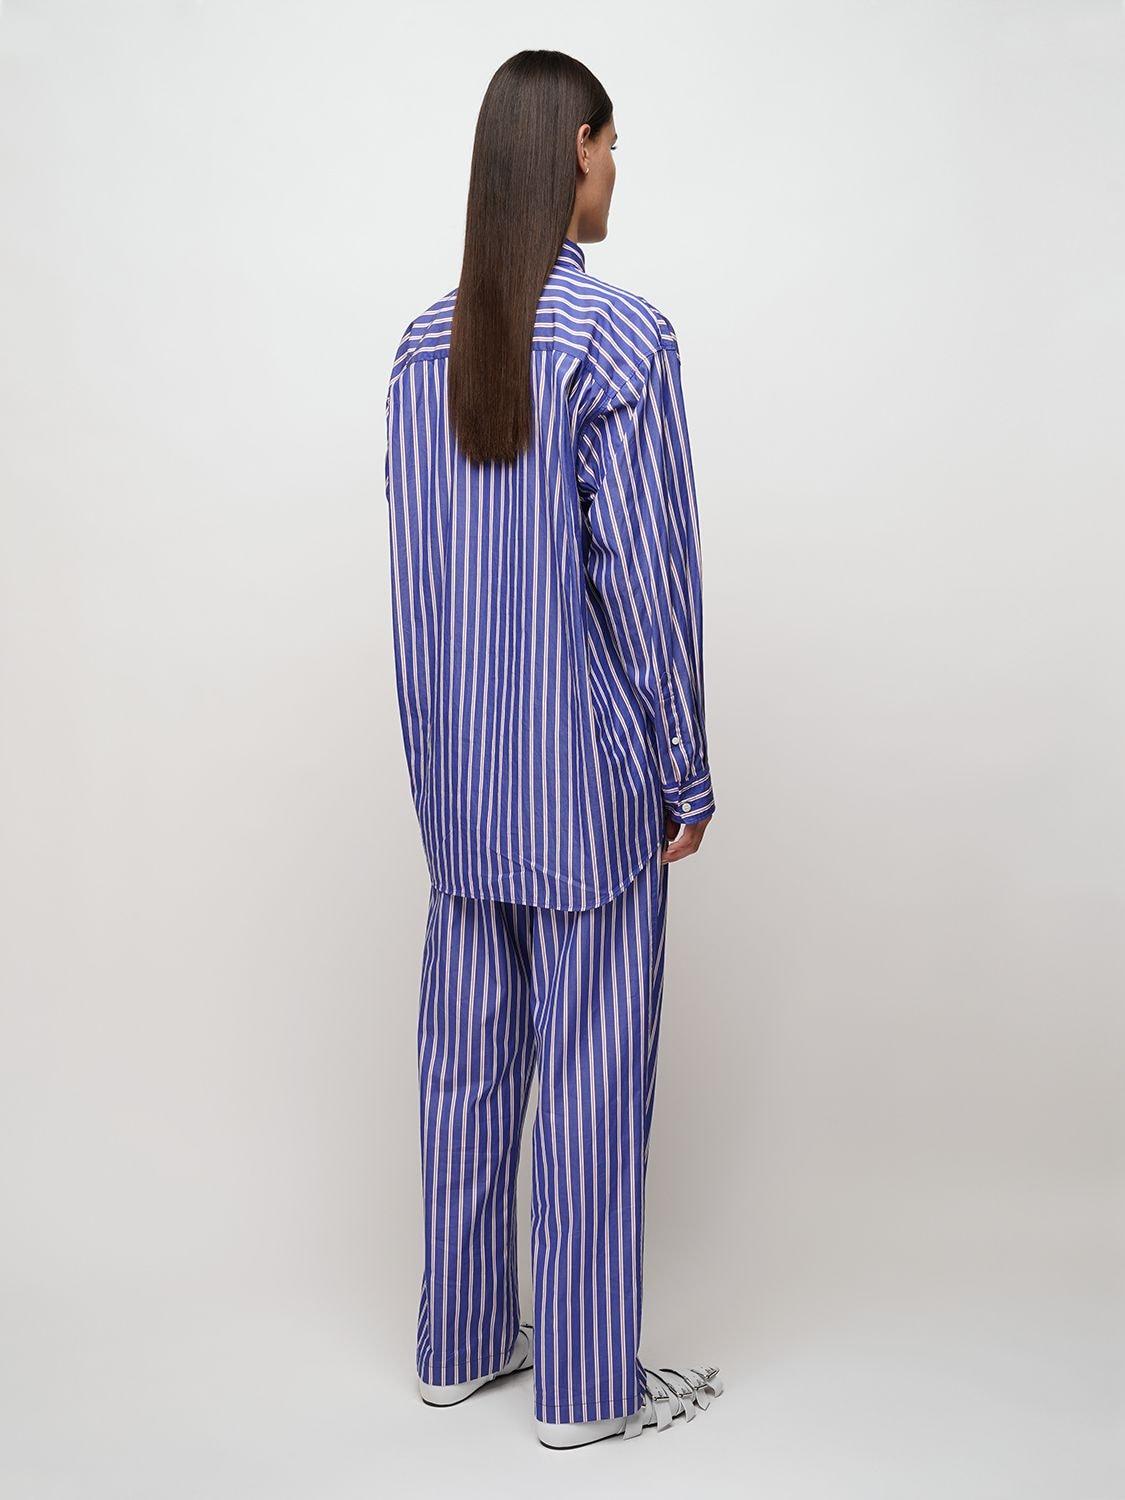 Balenciaga Striped Cotton Poplin Pajama Pants in Blue | Lyst